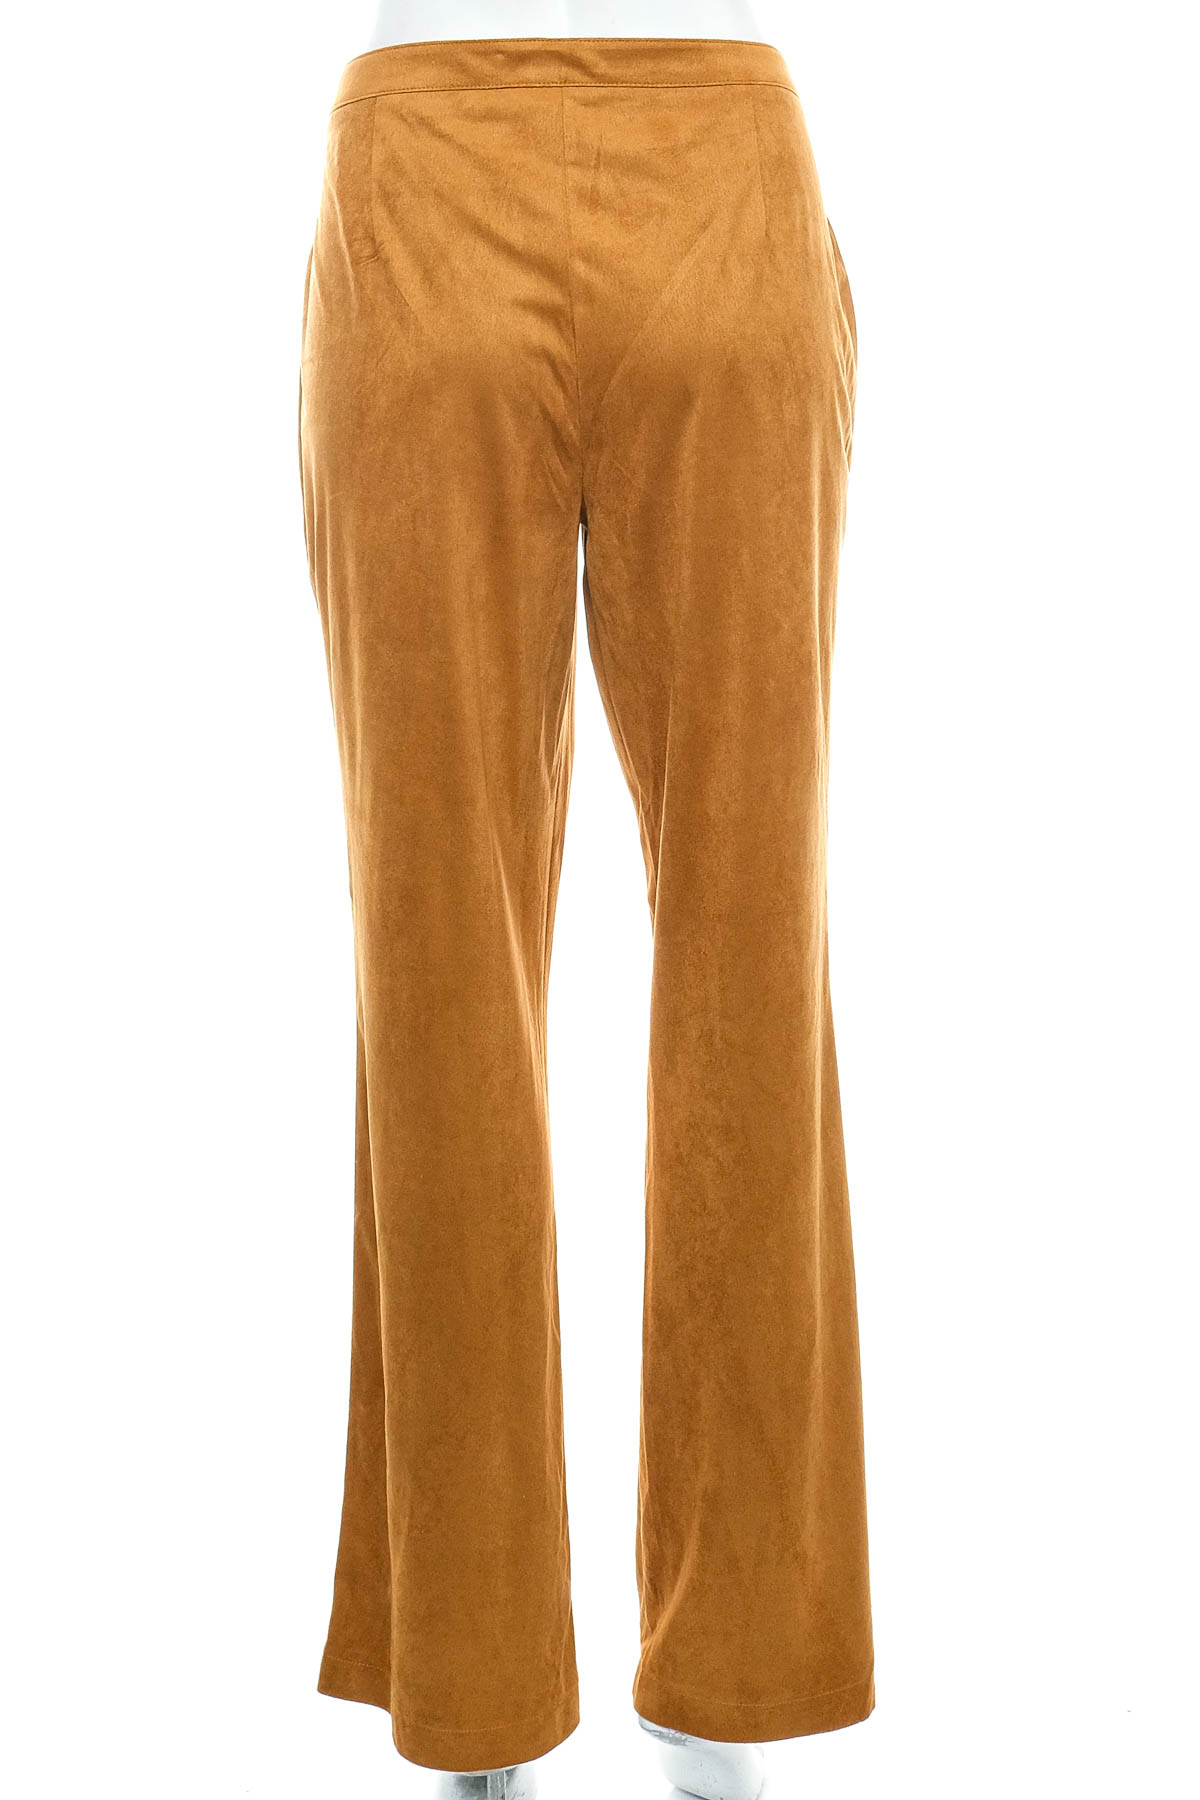 Women's trousers - Aniston - 1